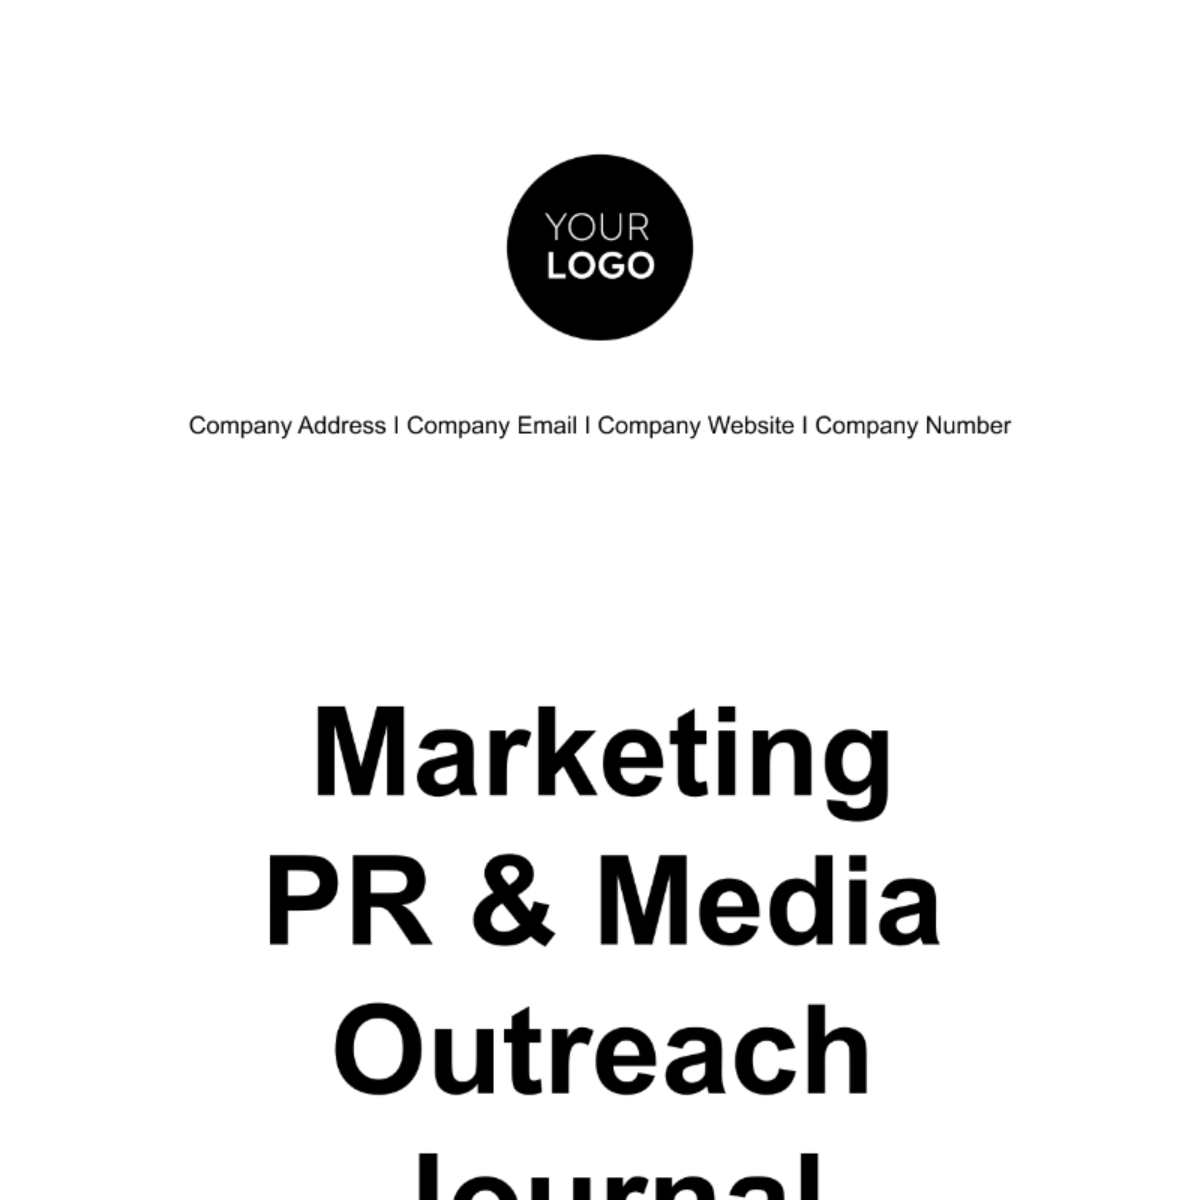 Marketing PR & Media Outreach Journal Template